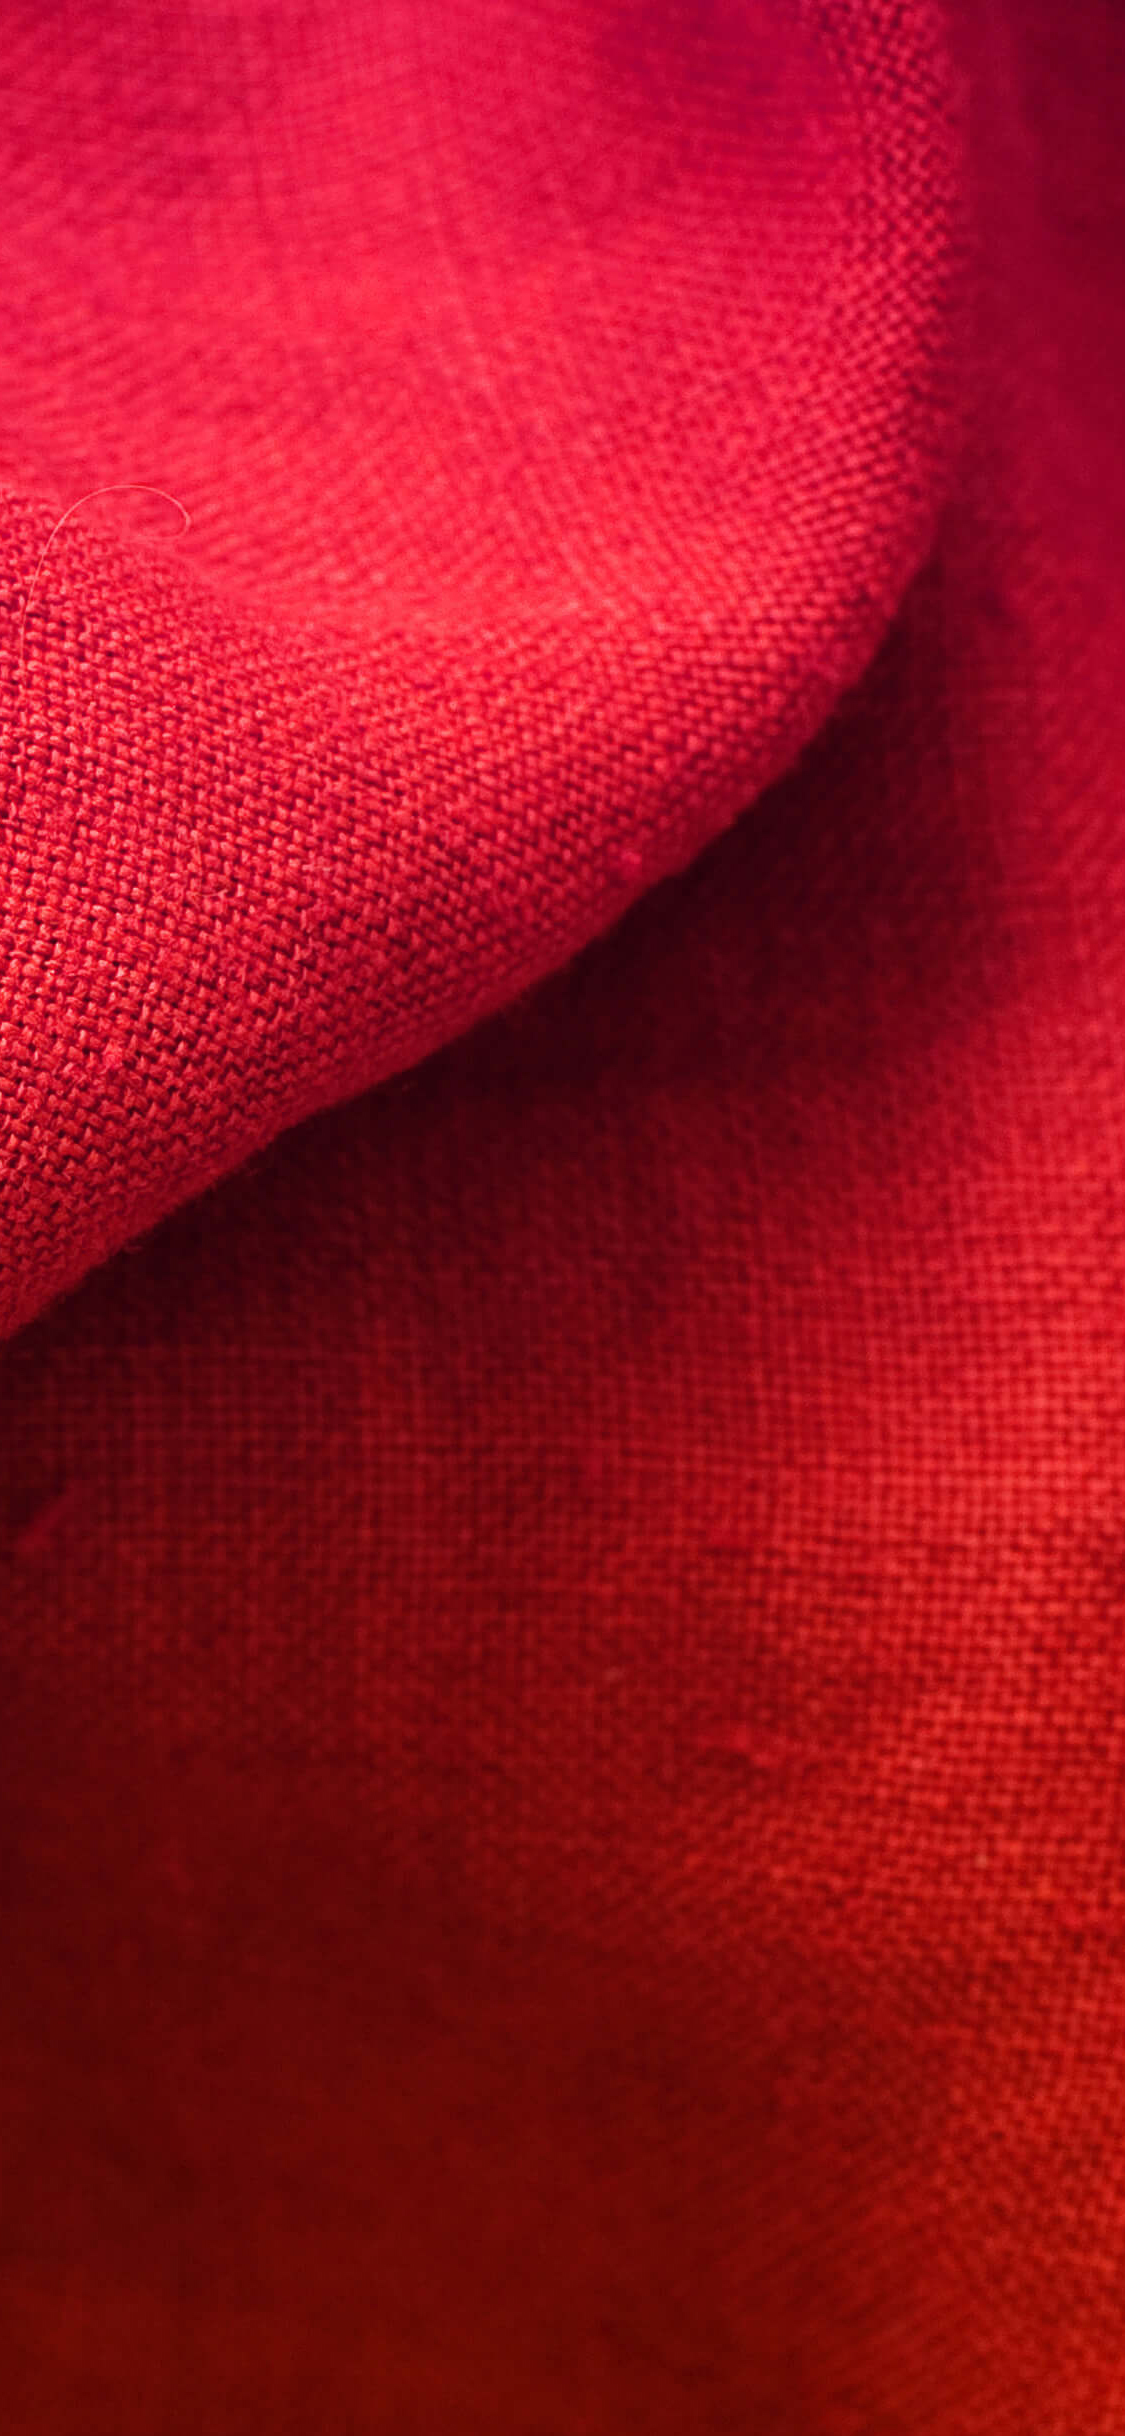 meizu wallpaper,rojo,rosado,textil,lino,lana